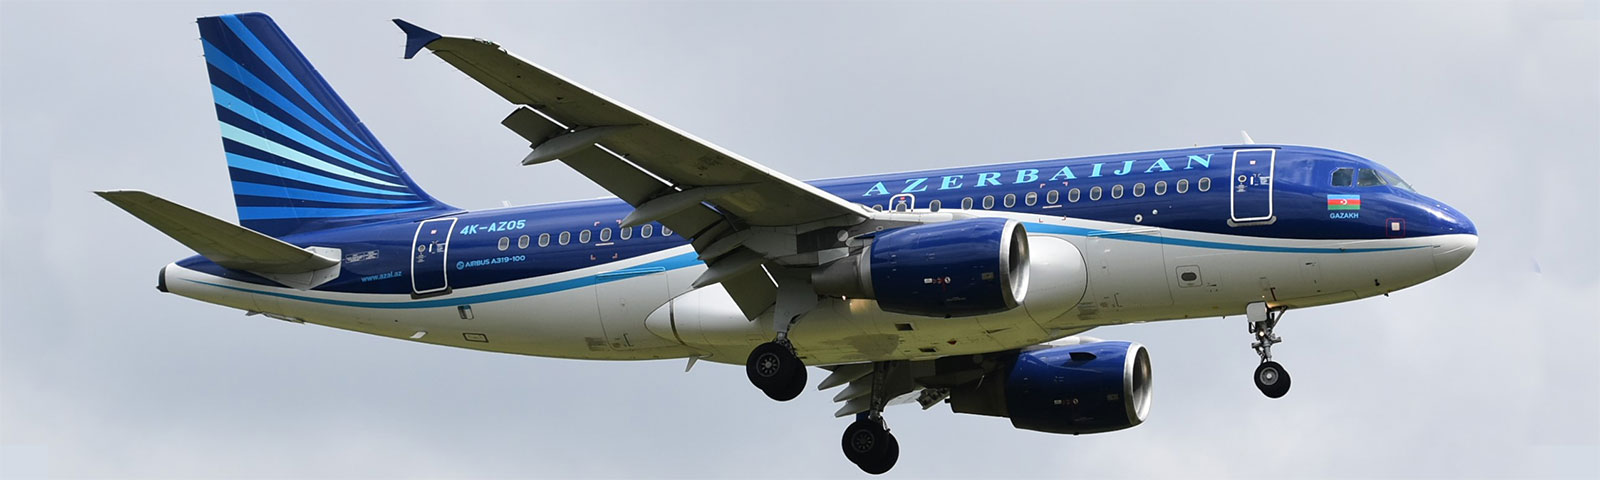 aereoplano azerbaijan airlinesin decollo